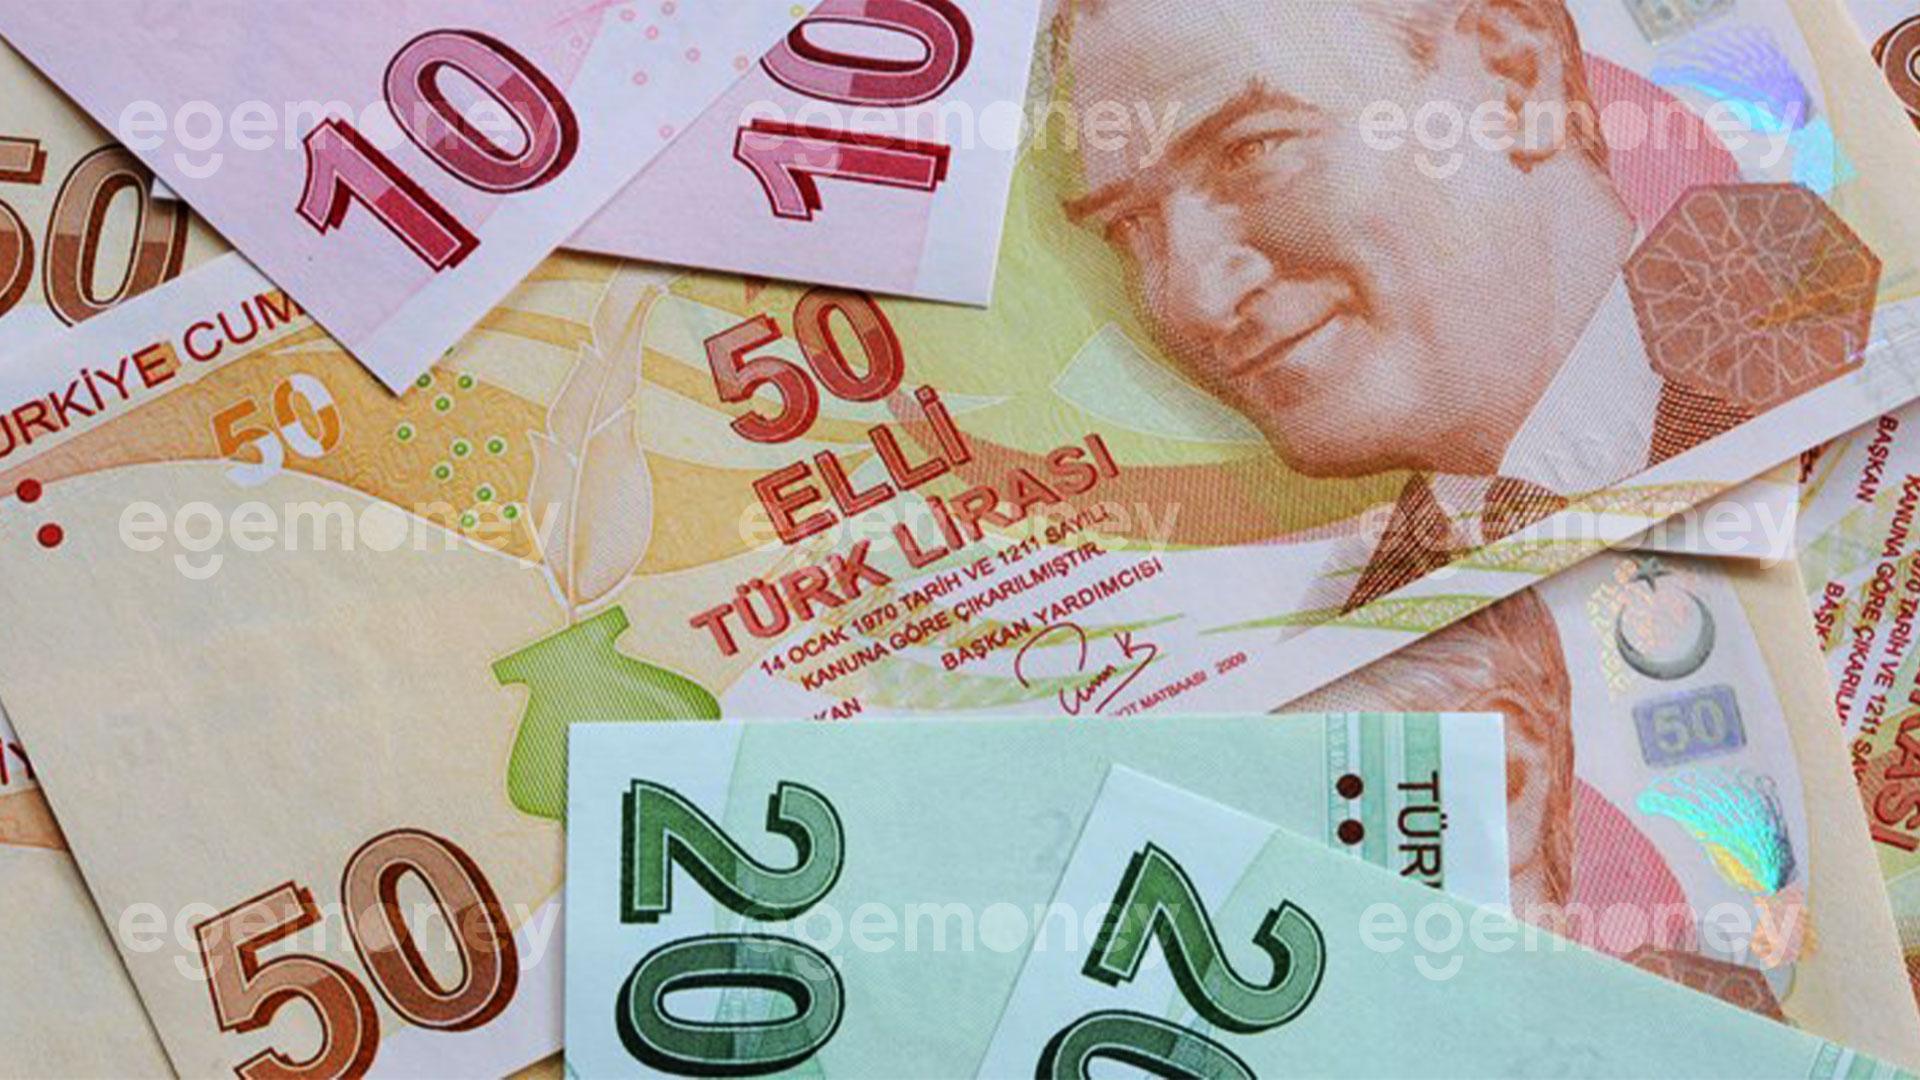 How to withdraw the Turkish Lira?